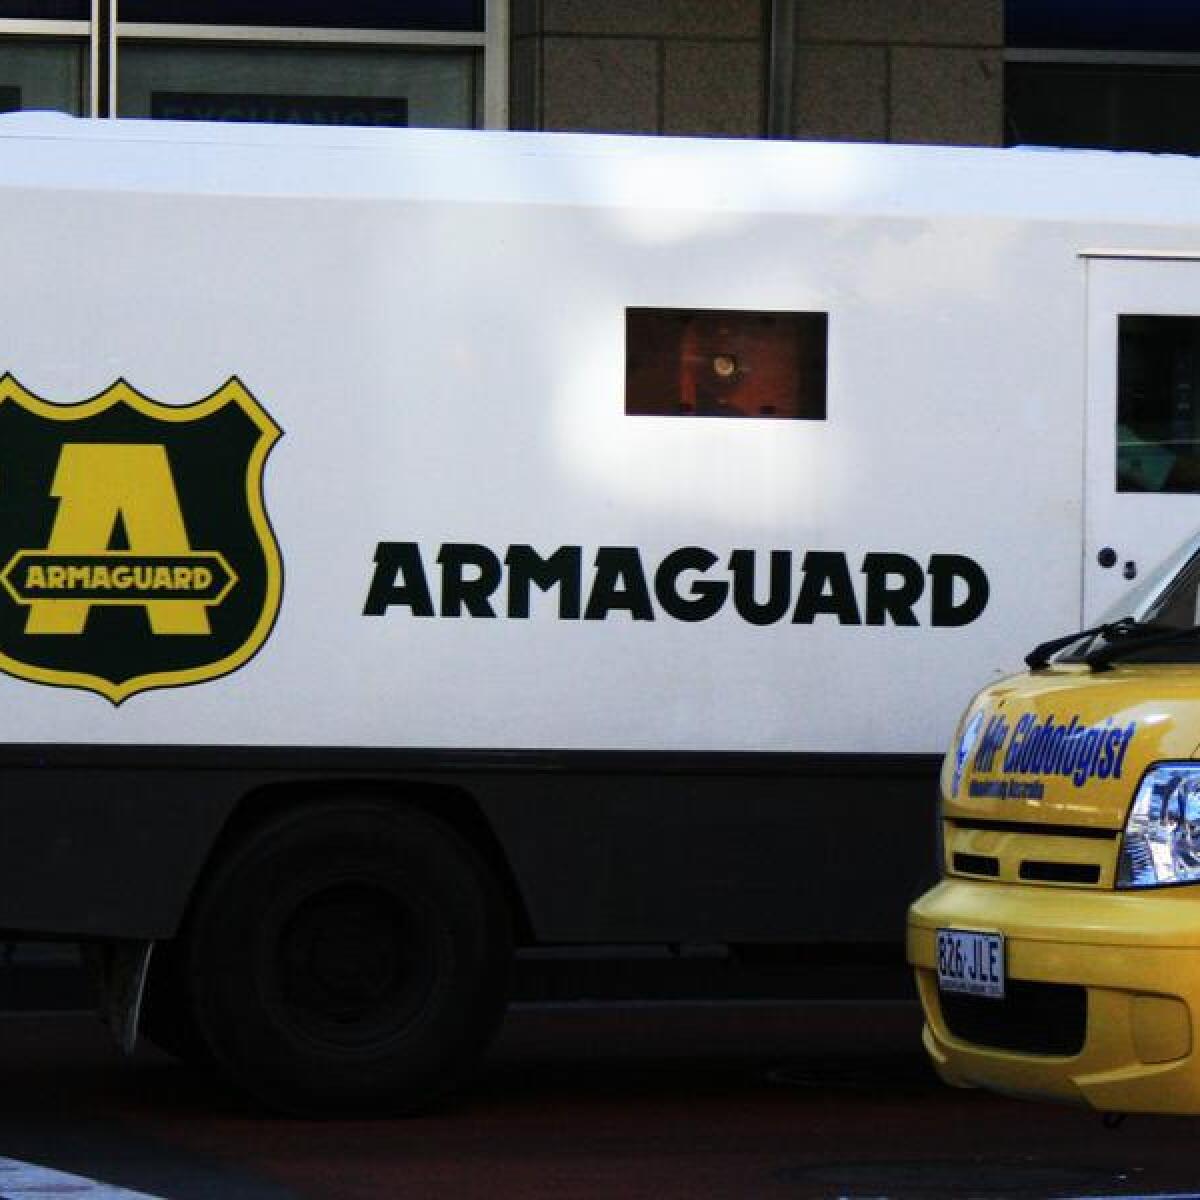 An Armaguard truck travels through Sydney.